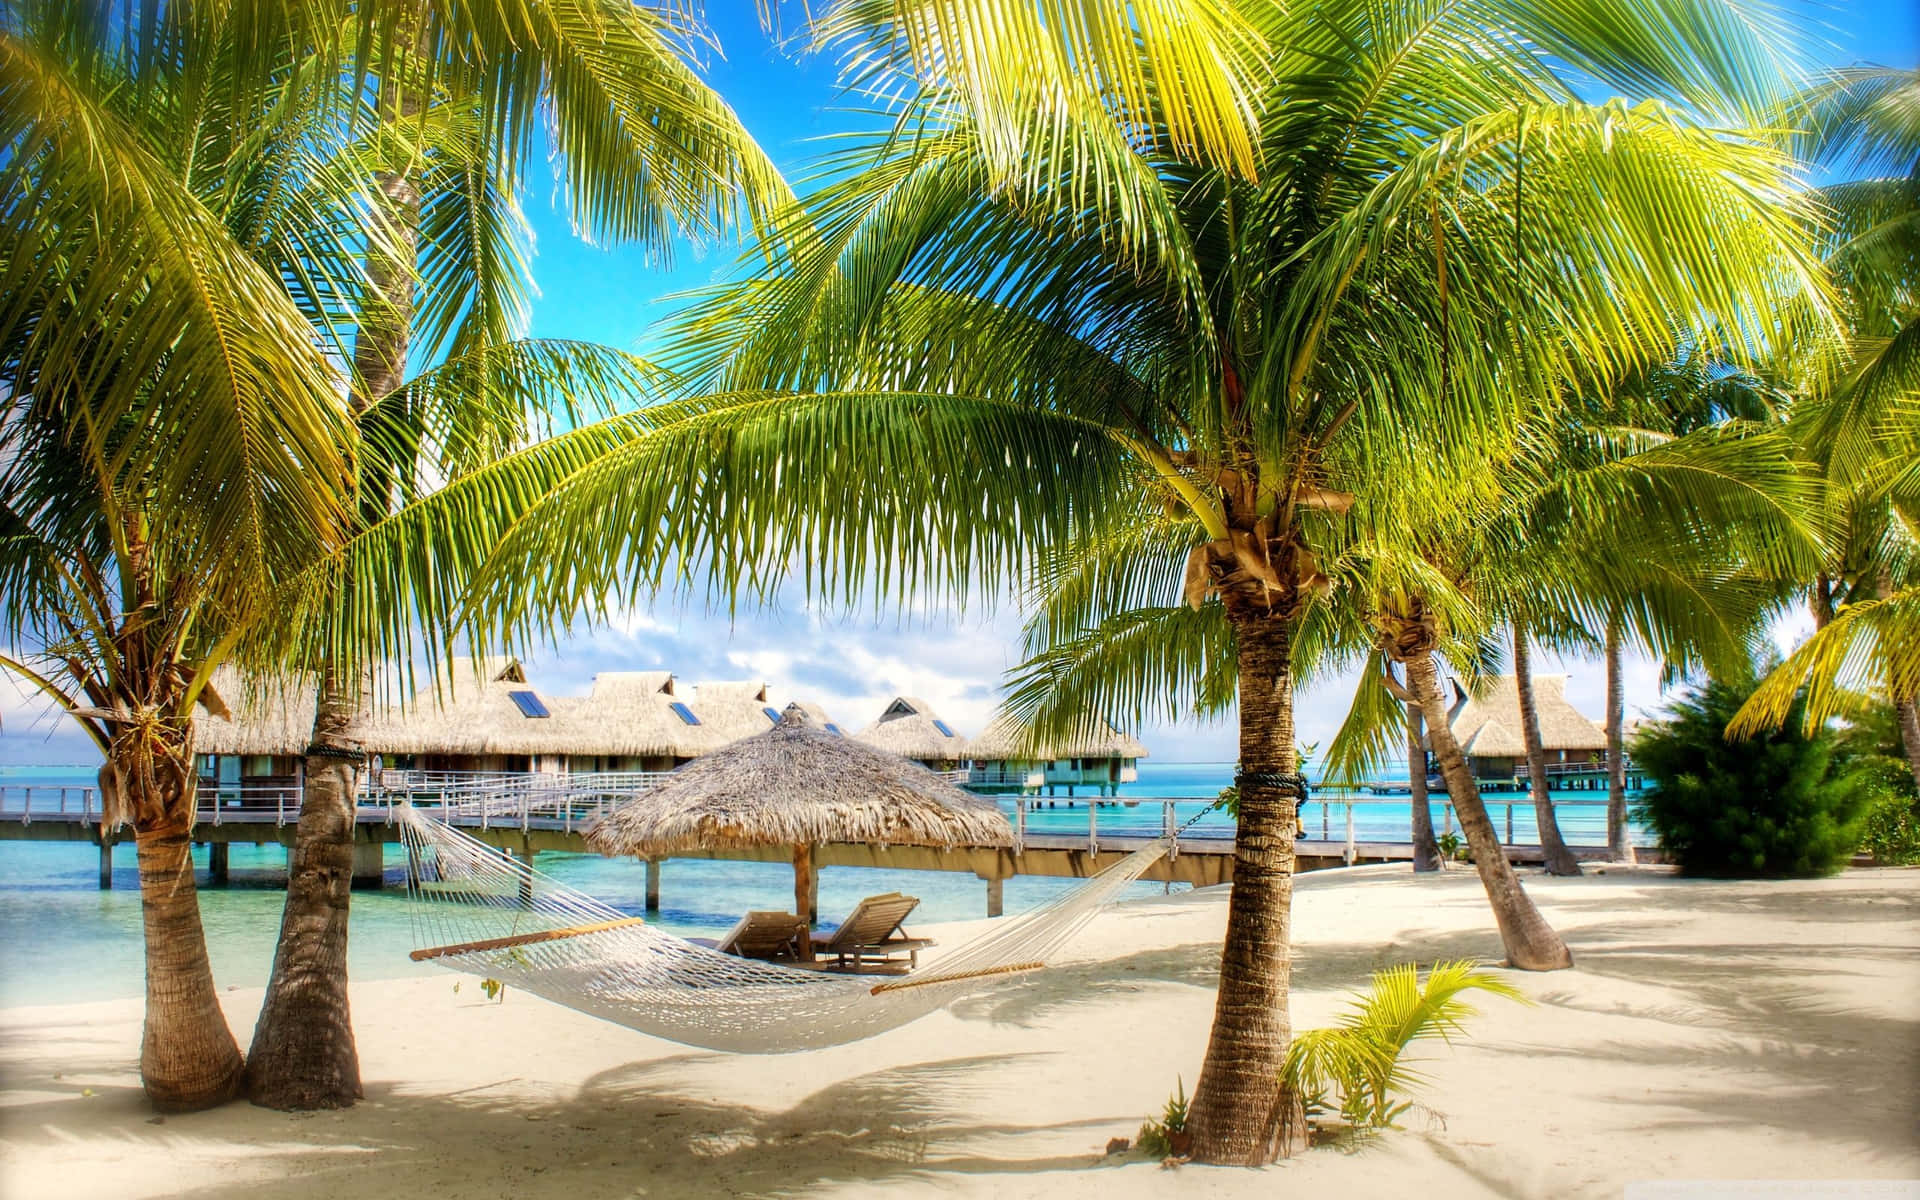 720p Beach Cabanas And Palm Trees Background